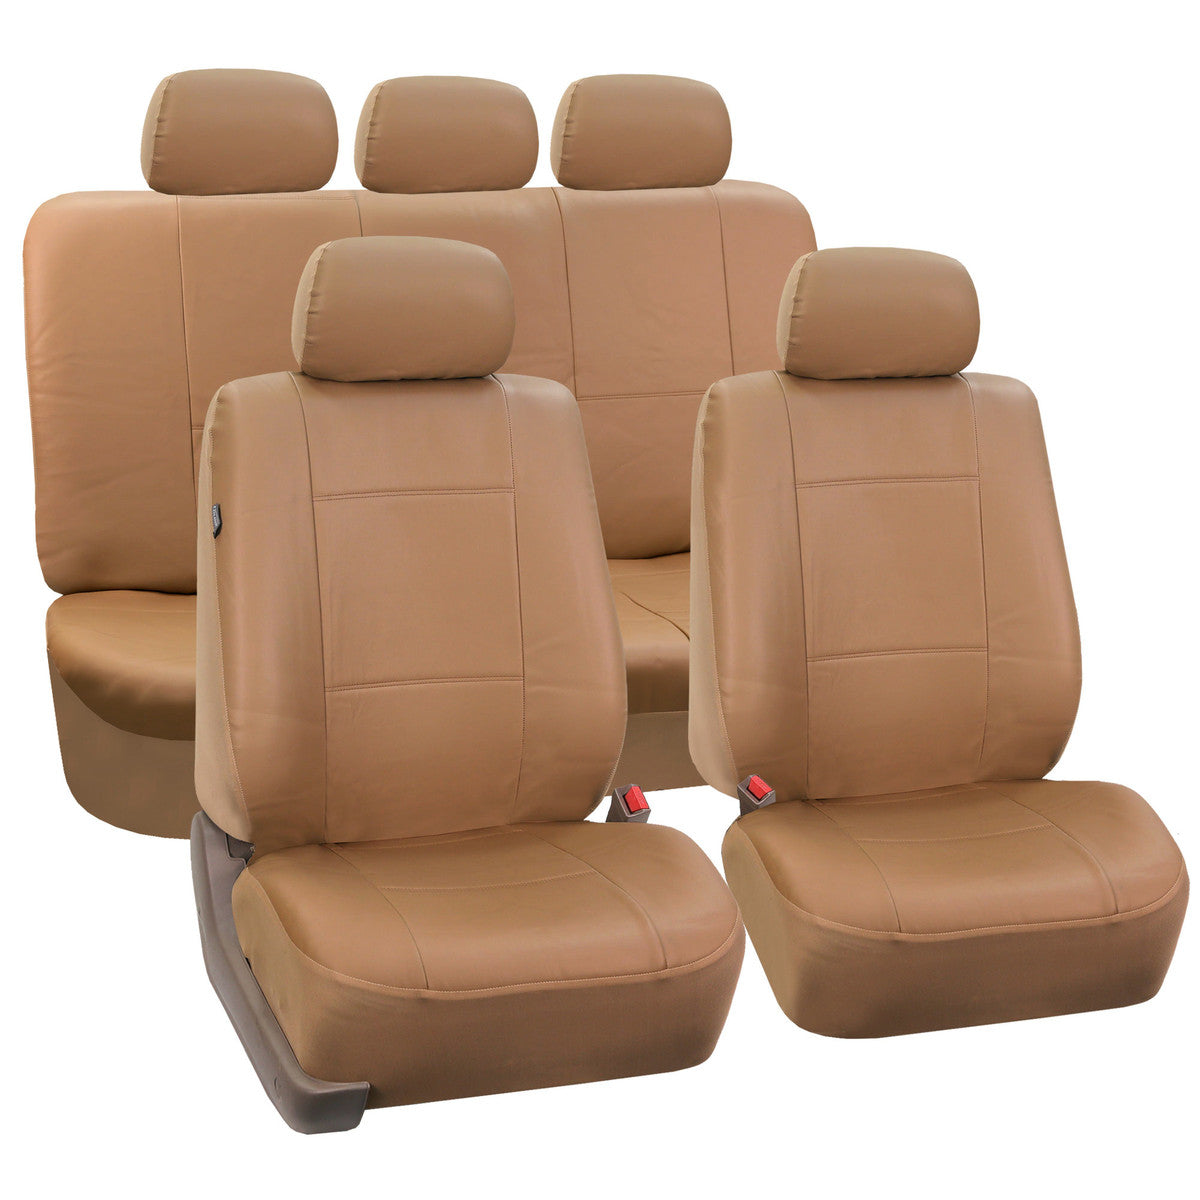 Premium PU Leather Seat Covers - Full Set Tan